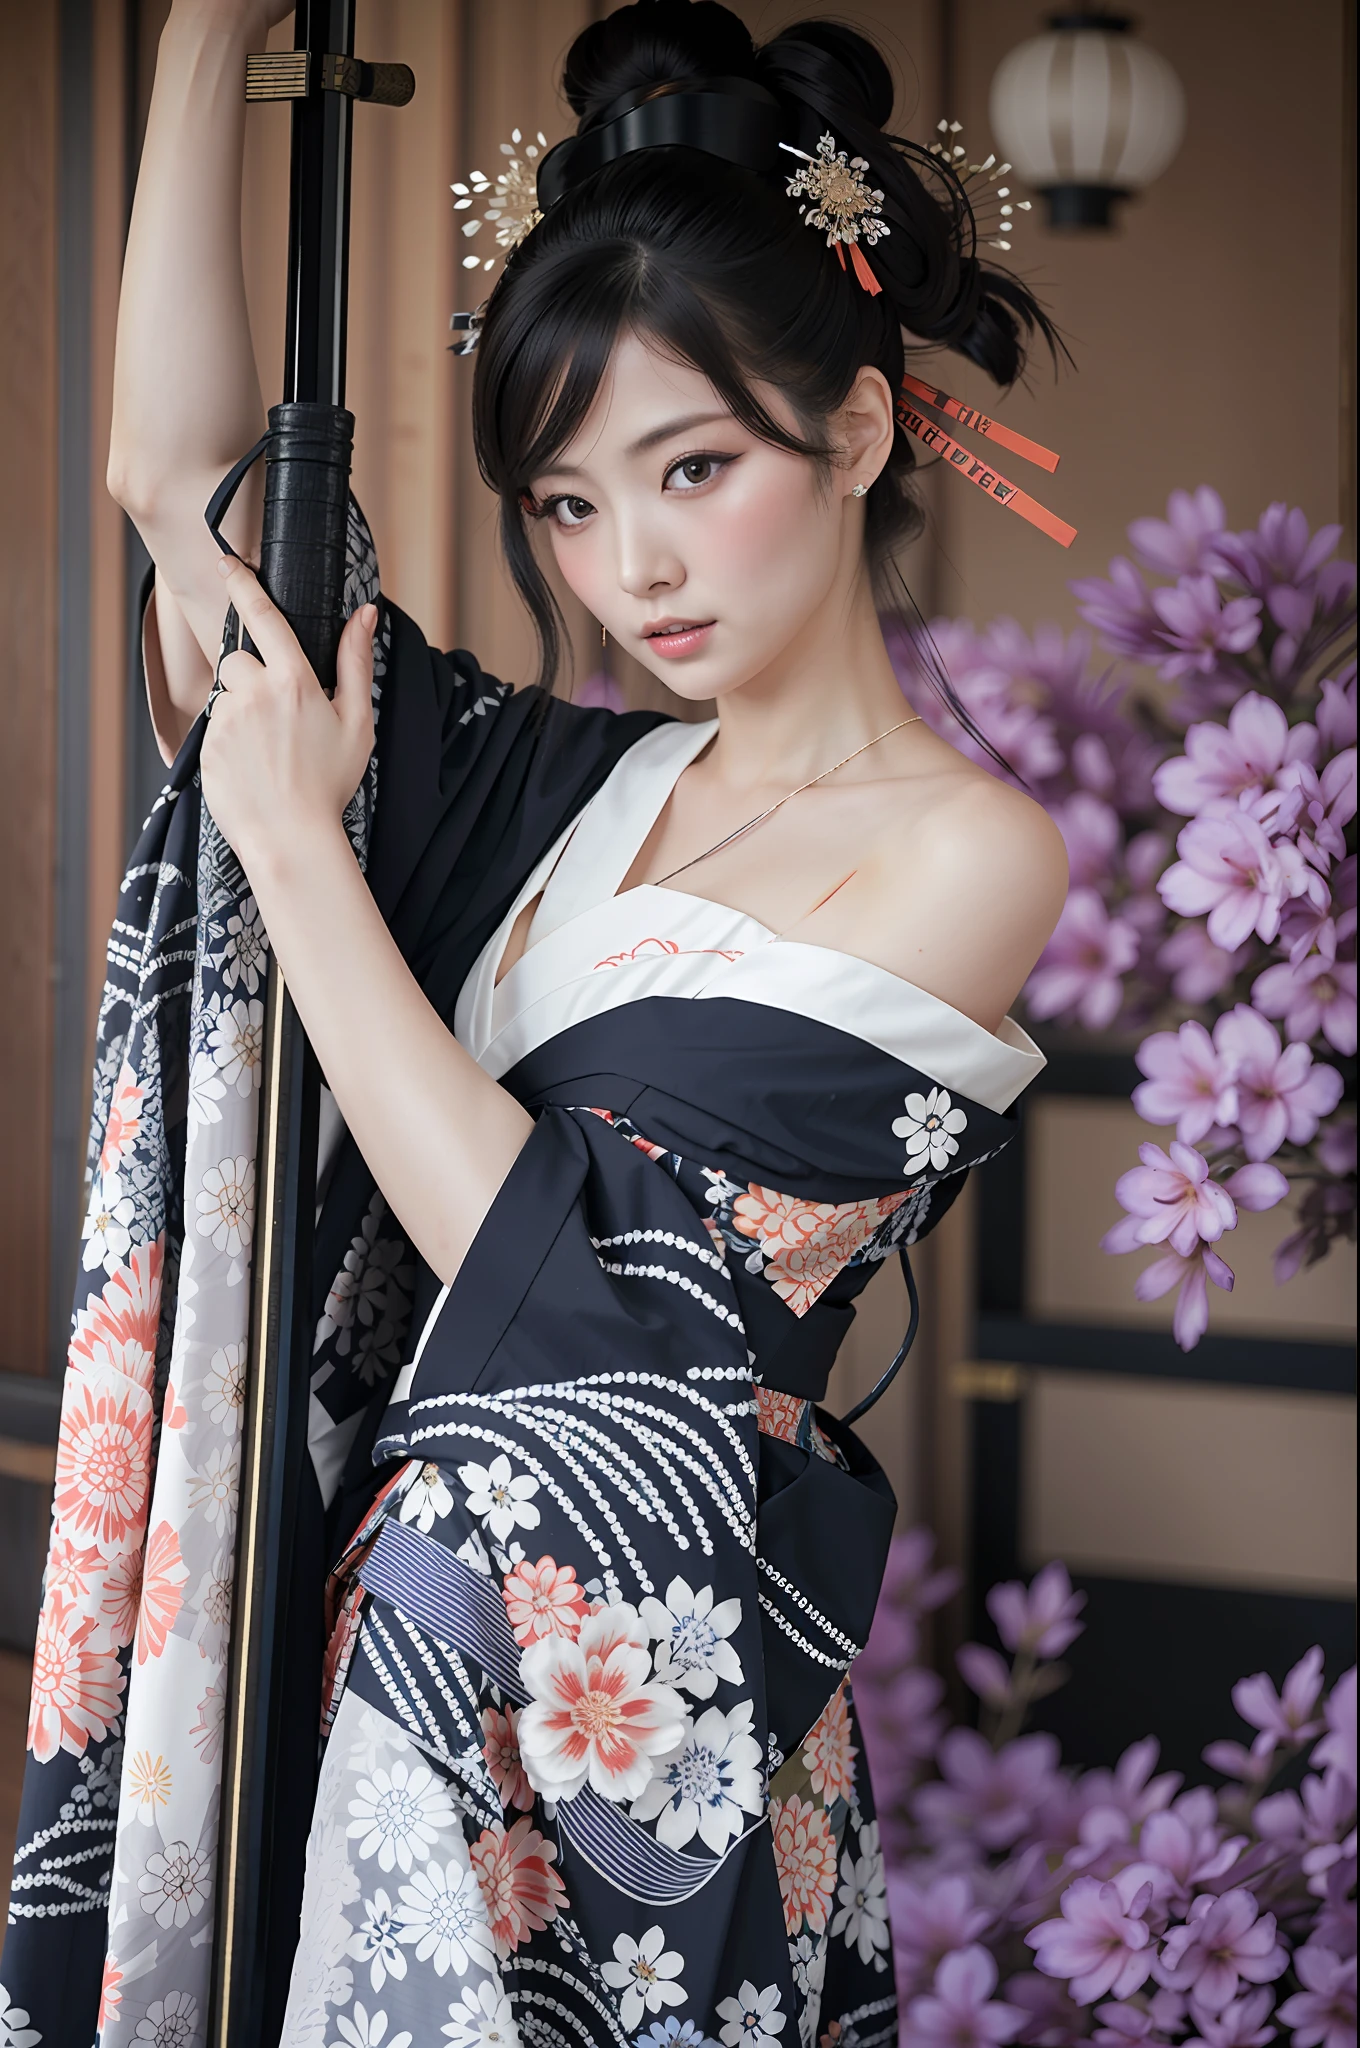 mujer asiática araffe vestida de kimono sosteniendo una espada, modelo japonés, Diosa japonesa, in kimono, elegant mujer japonesa, kimono japonés, kimono, geisha glamorosa y sexy, vistiendo kimono, estilo japonés, classy ropa yukata, japonés tradicional, intrincado kimono de geisha, ropa tradicional de geisha, ropa japonesa, mujer japonesa, ropa yukata, escote, grande ,